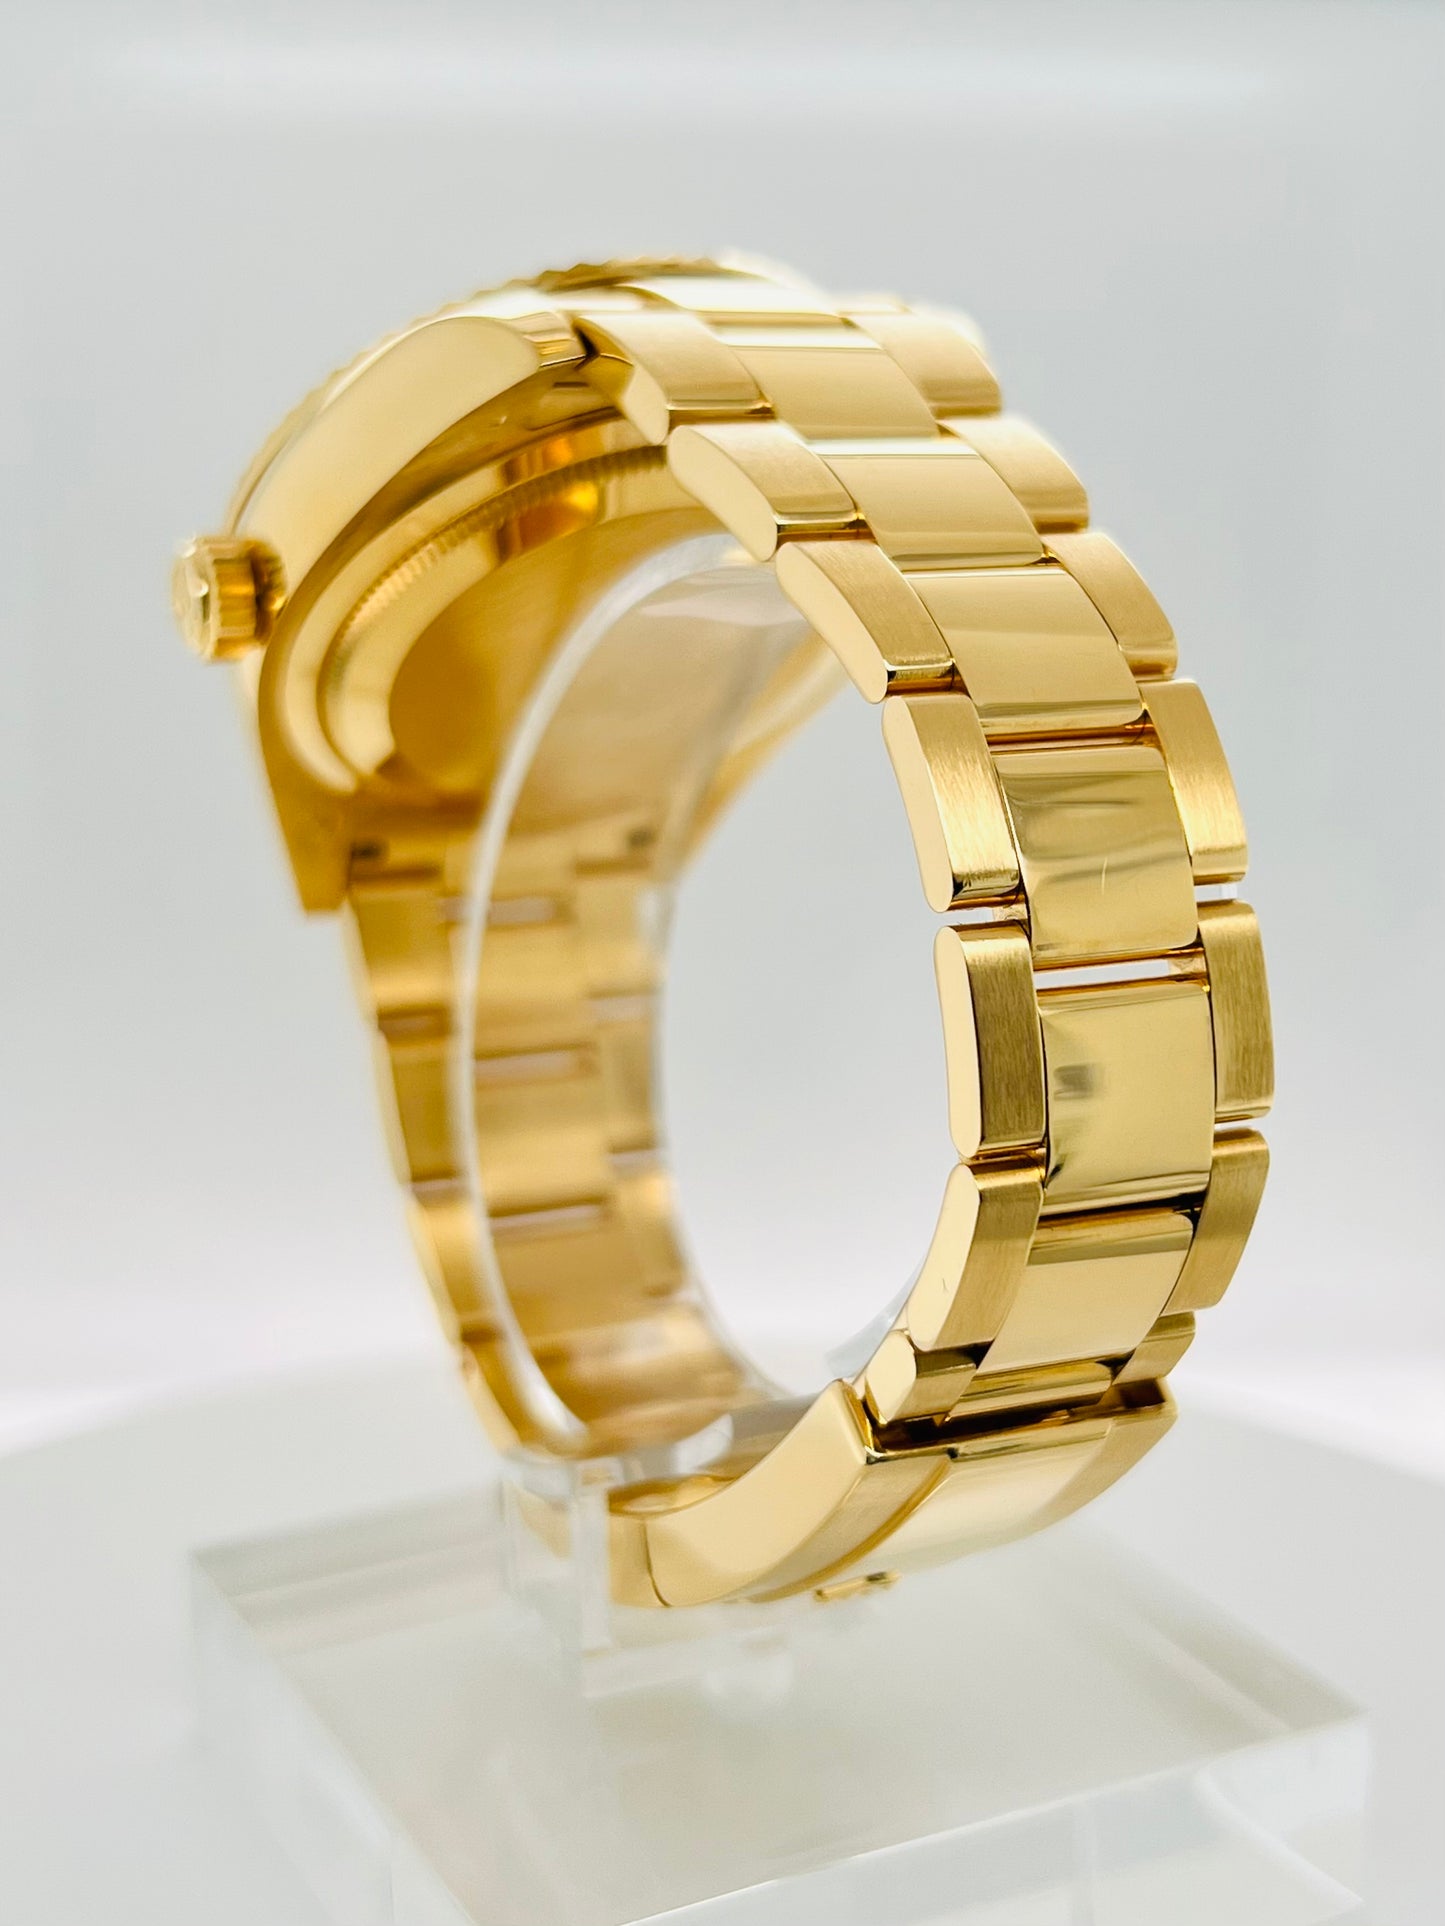 Rolex Sky-Dweller 42mm Champagne Dial Gold Men's Watch Model #326938